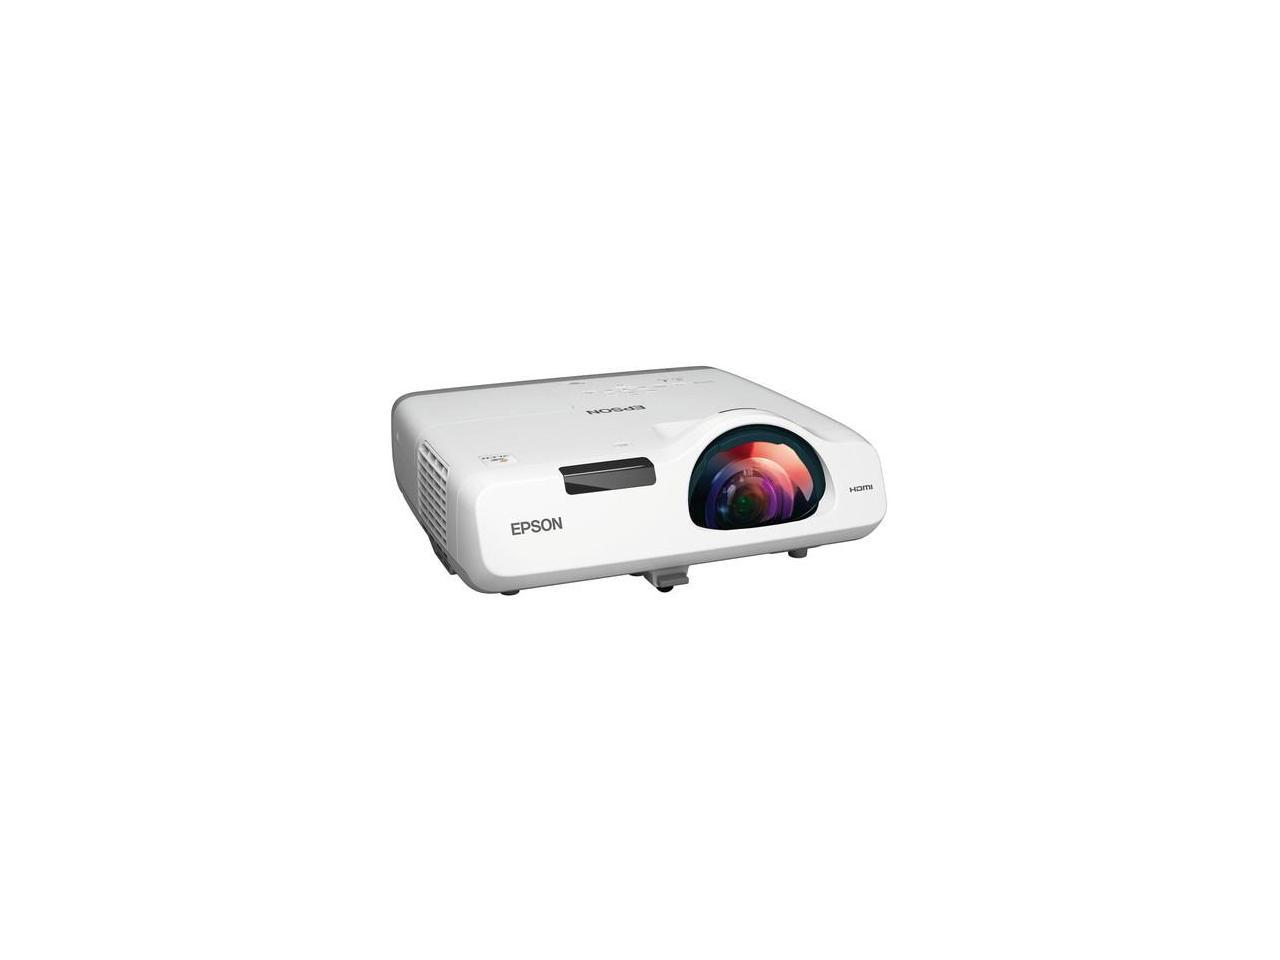 Epson PowerLite 520 XGA 3LCD Short-throw Projector 2700 lumens, V11H674020